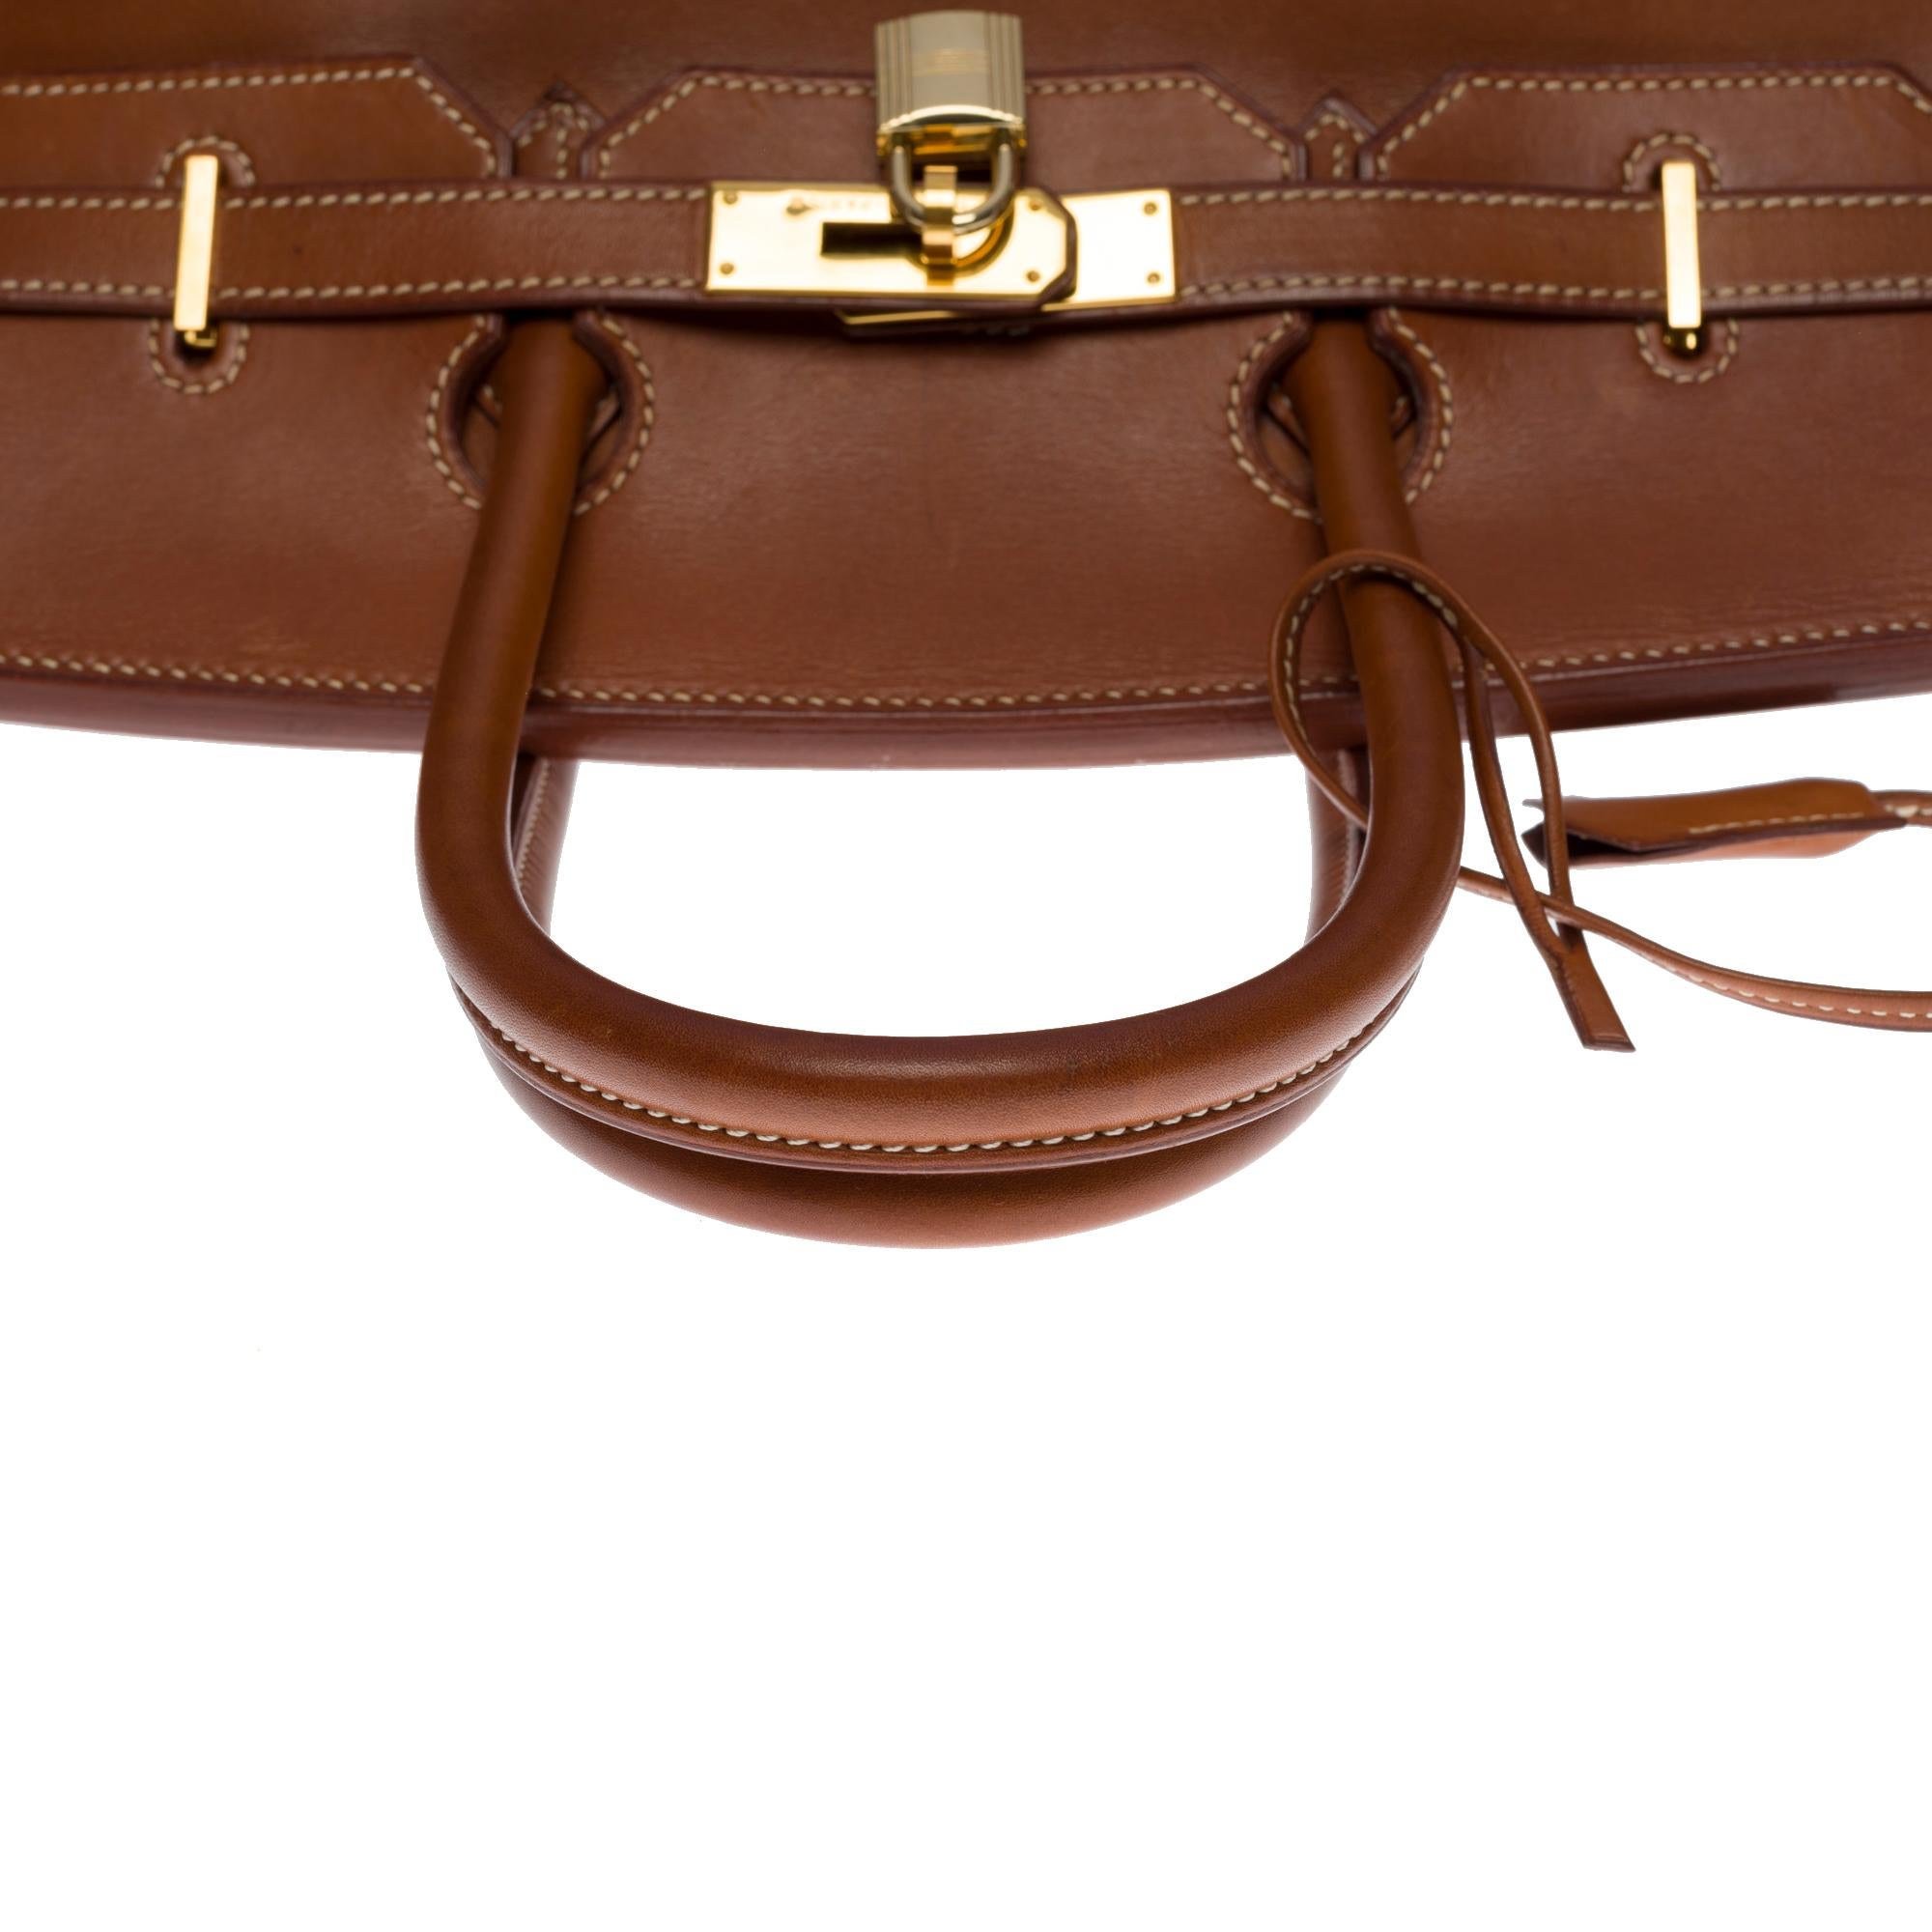 Women's Rare & Exceptional Hermès Birkin 35 handbag in Gold Barenia leather, GHW